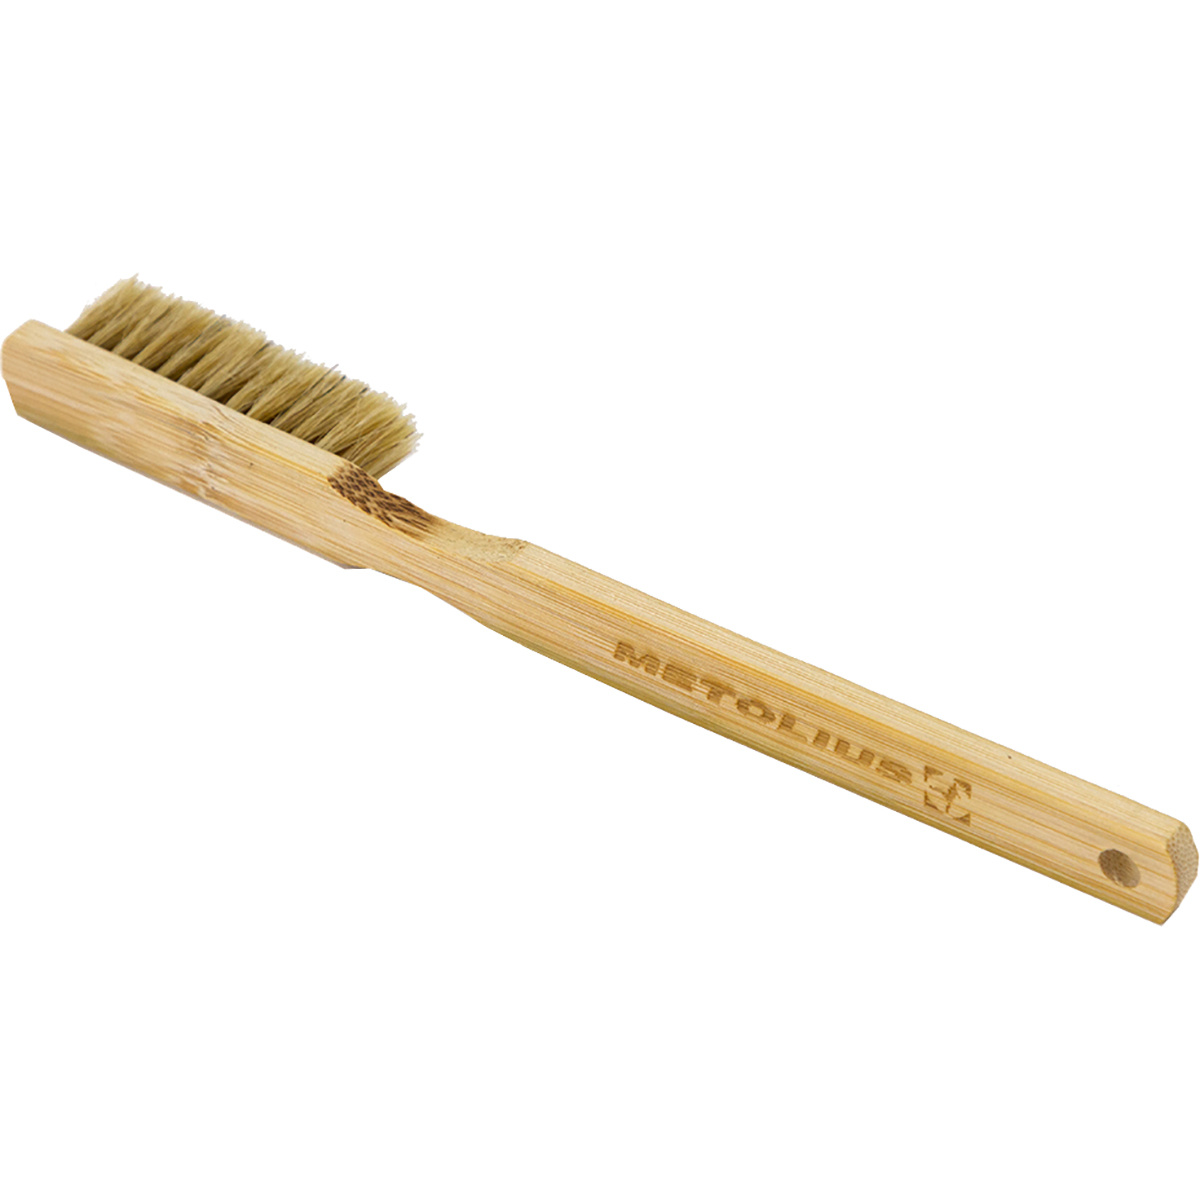 Metolius Bamboo Boar's Hair Brush von Metolius